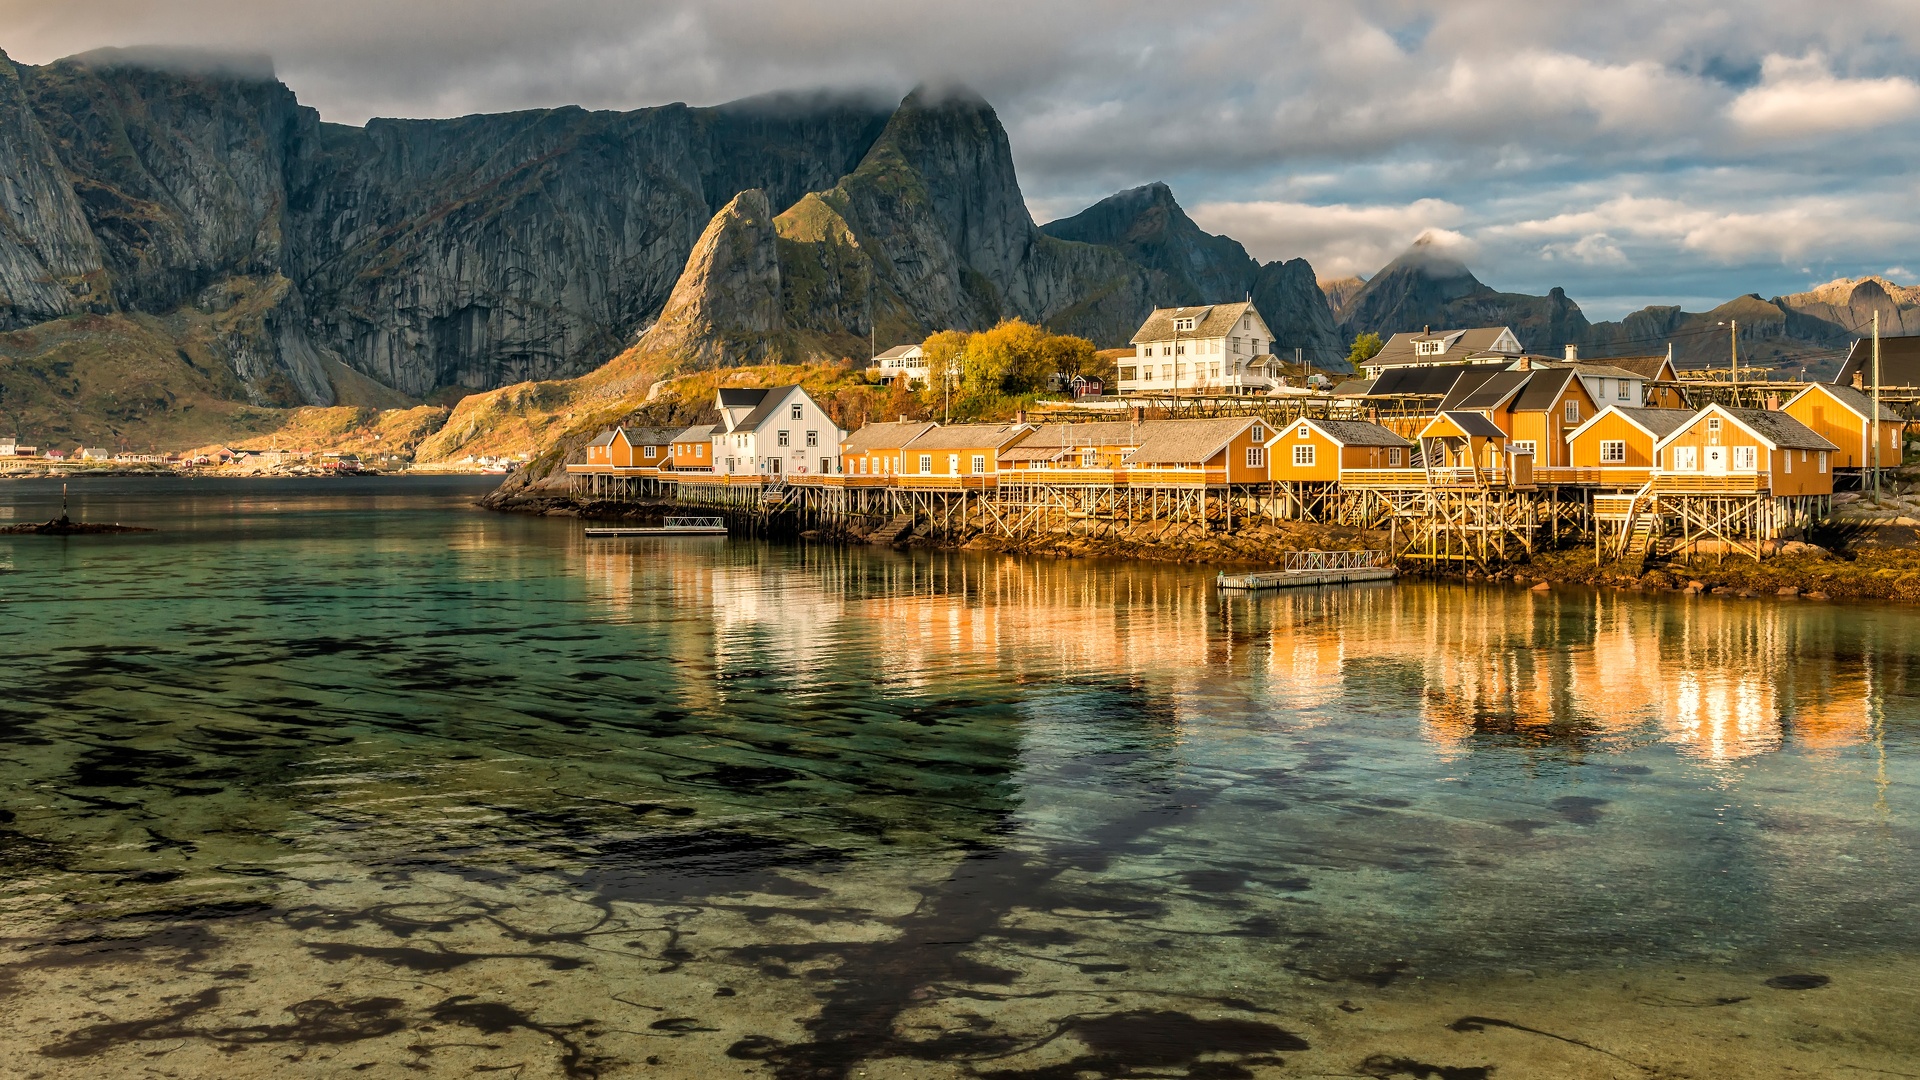 Village en bord de mer - Norvège.jpg